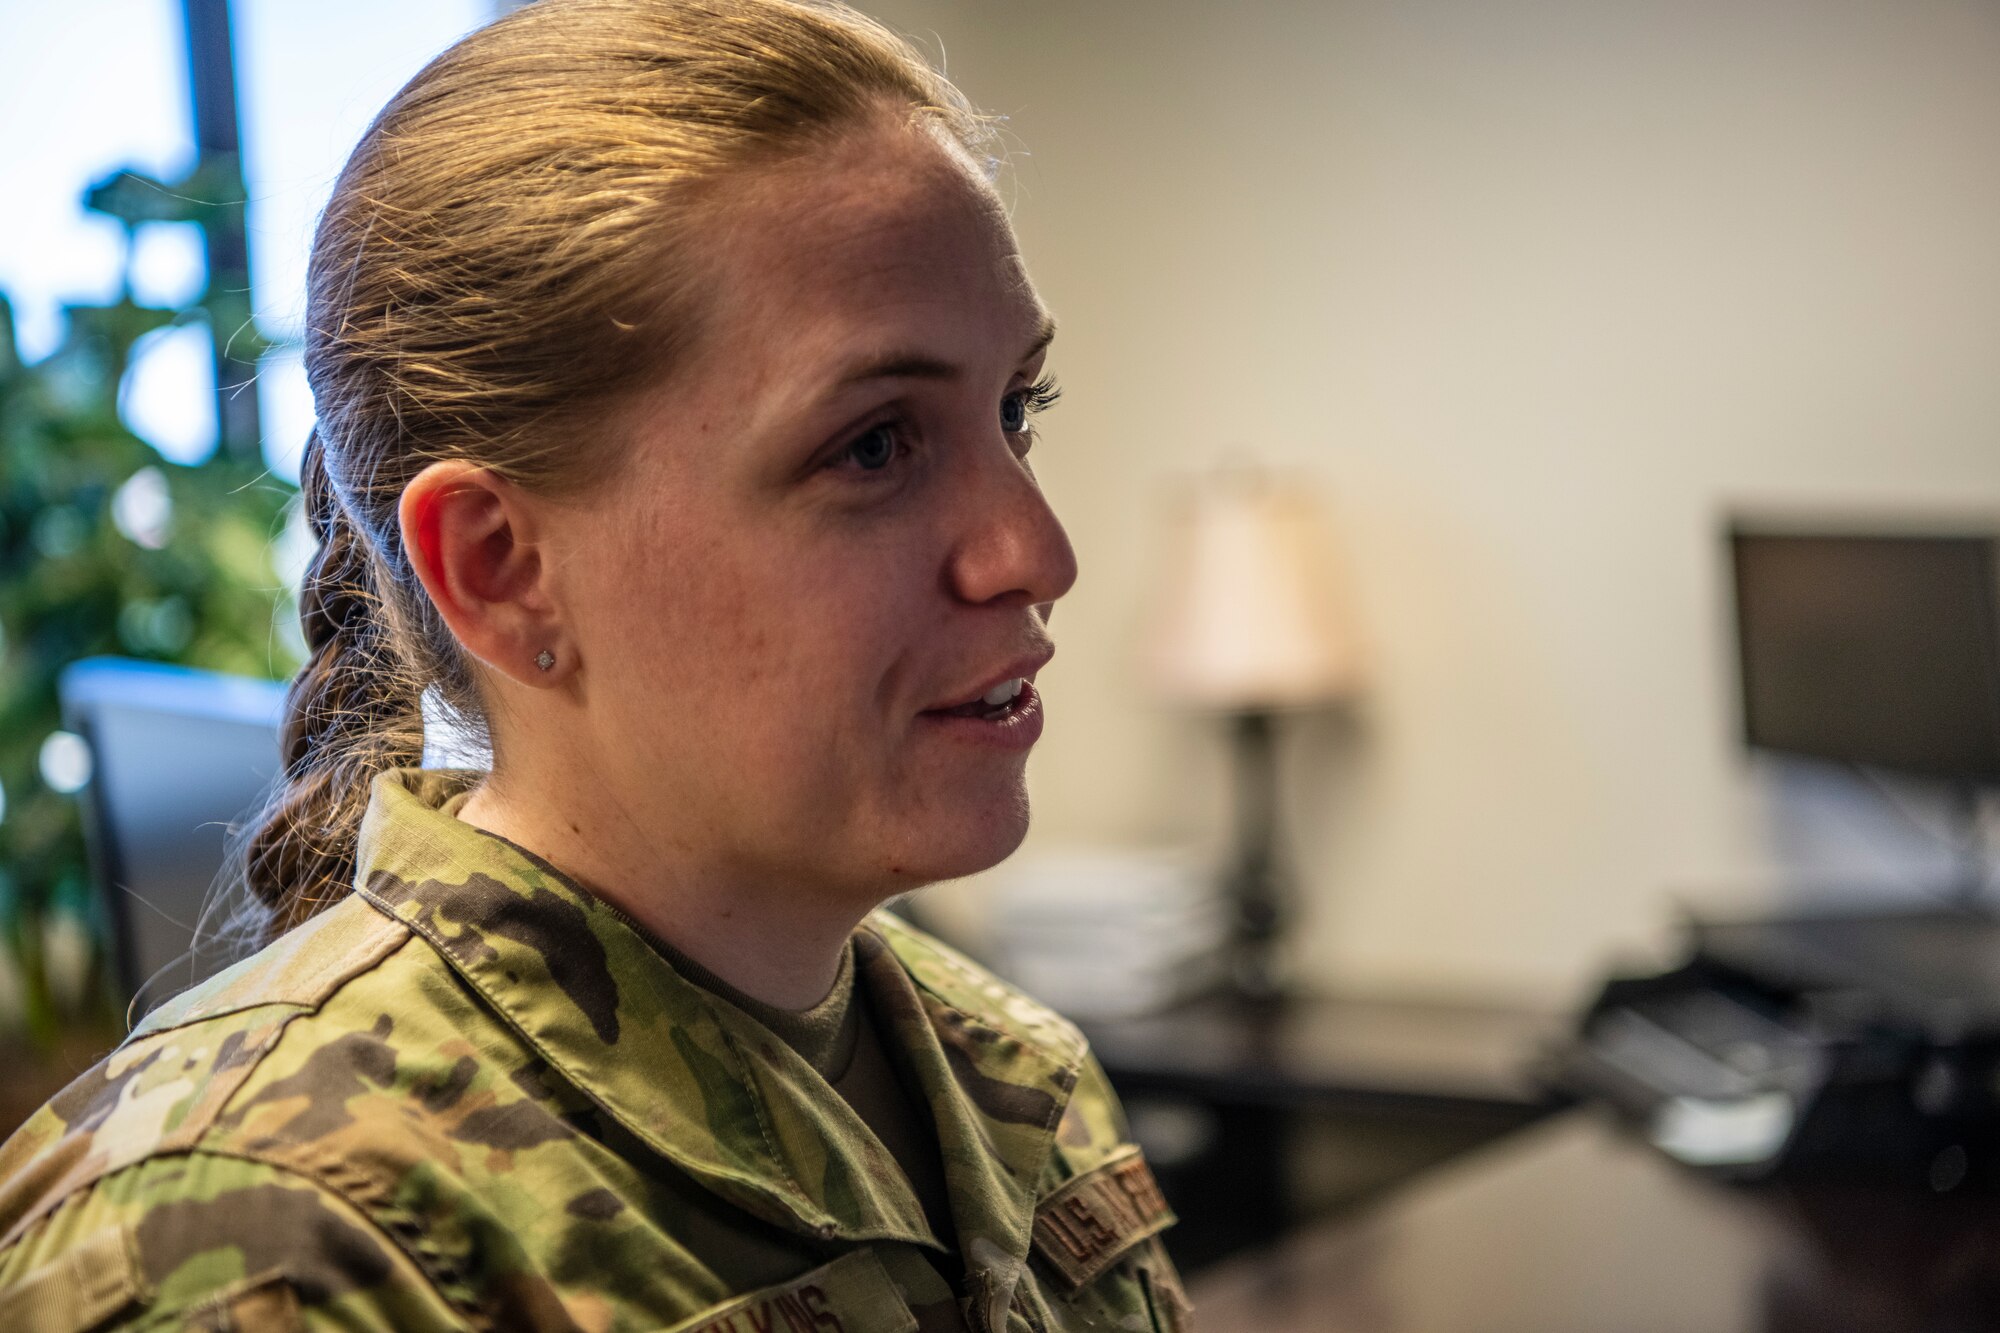 An Airman's portrait is taken while she briefs base leadership.